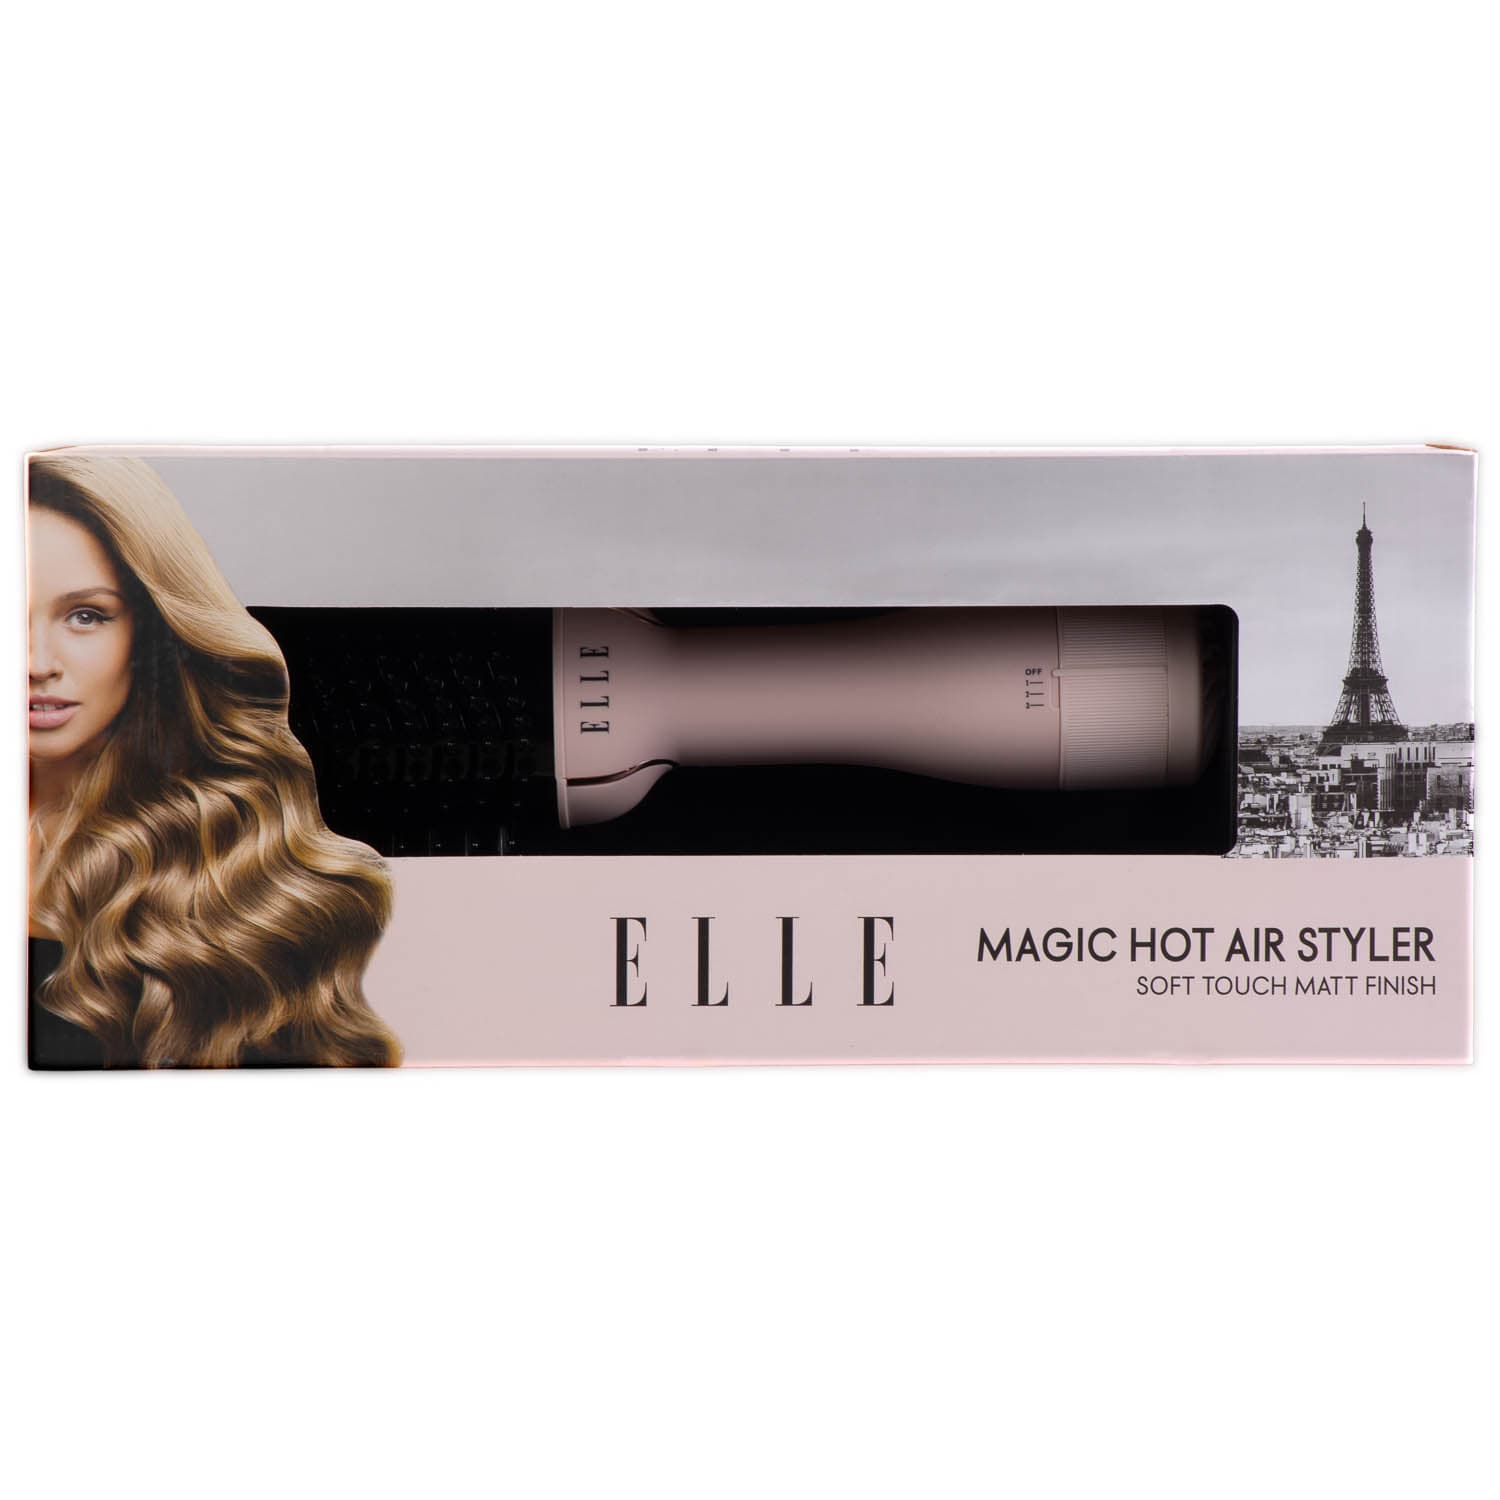 Elle Magic Hot Air Styler | Hair Styling Tools for Women - B&M